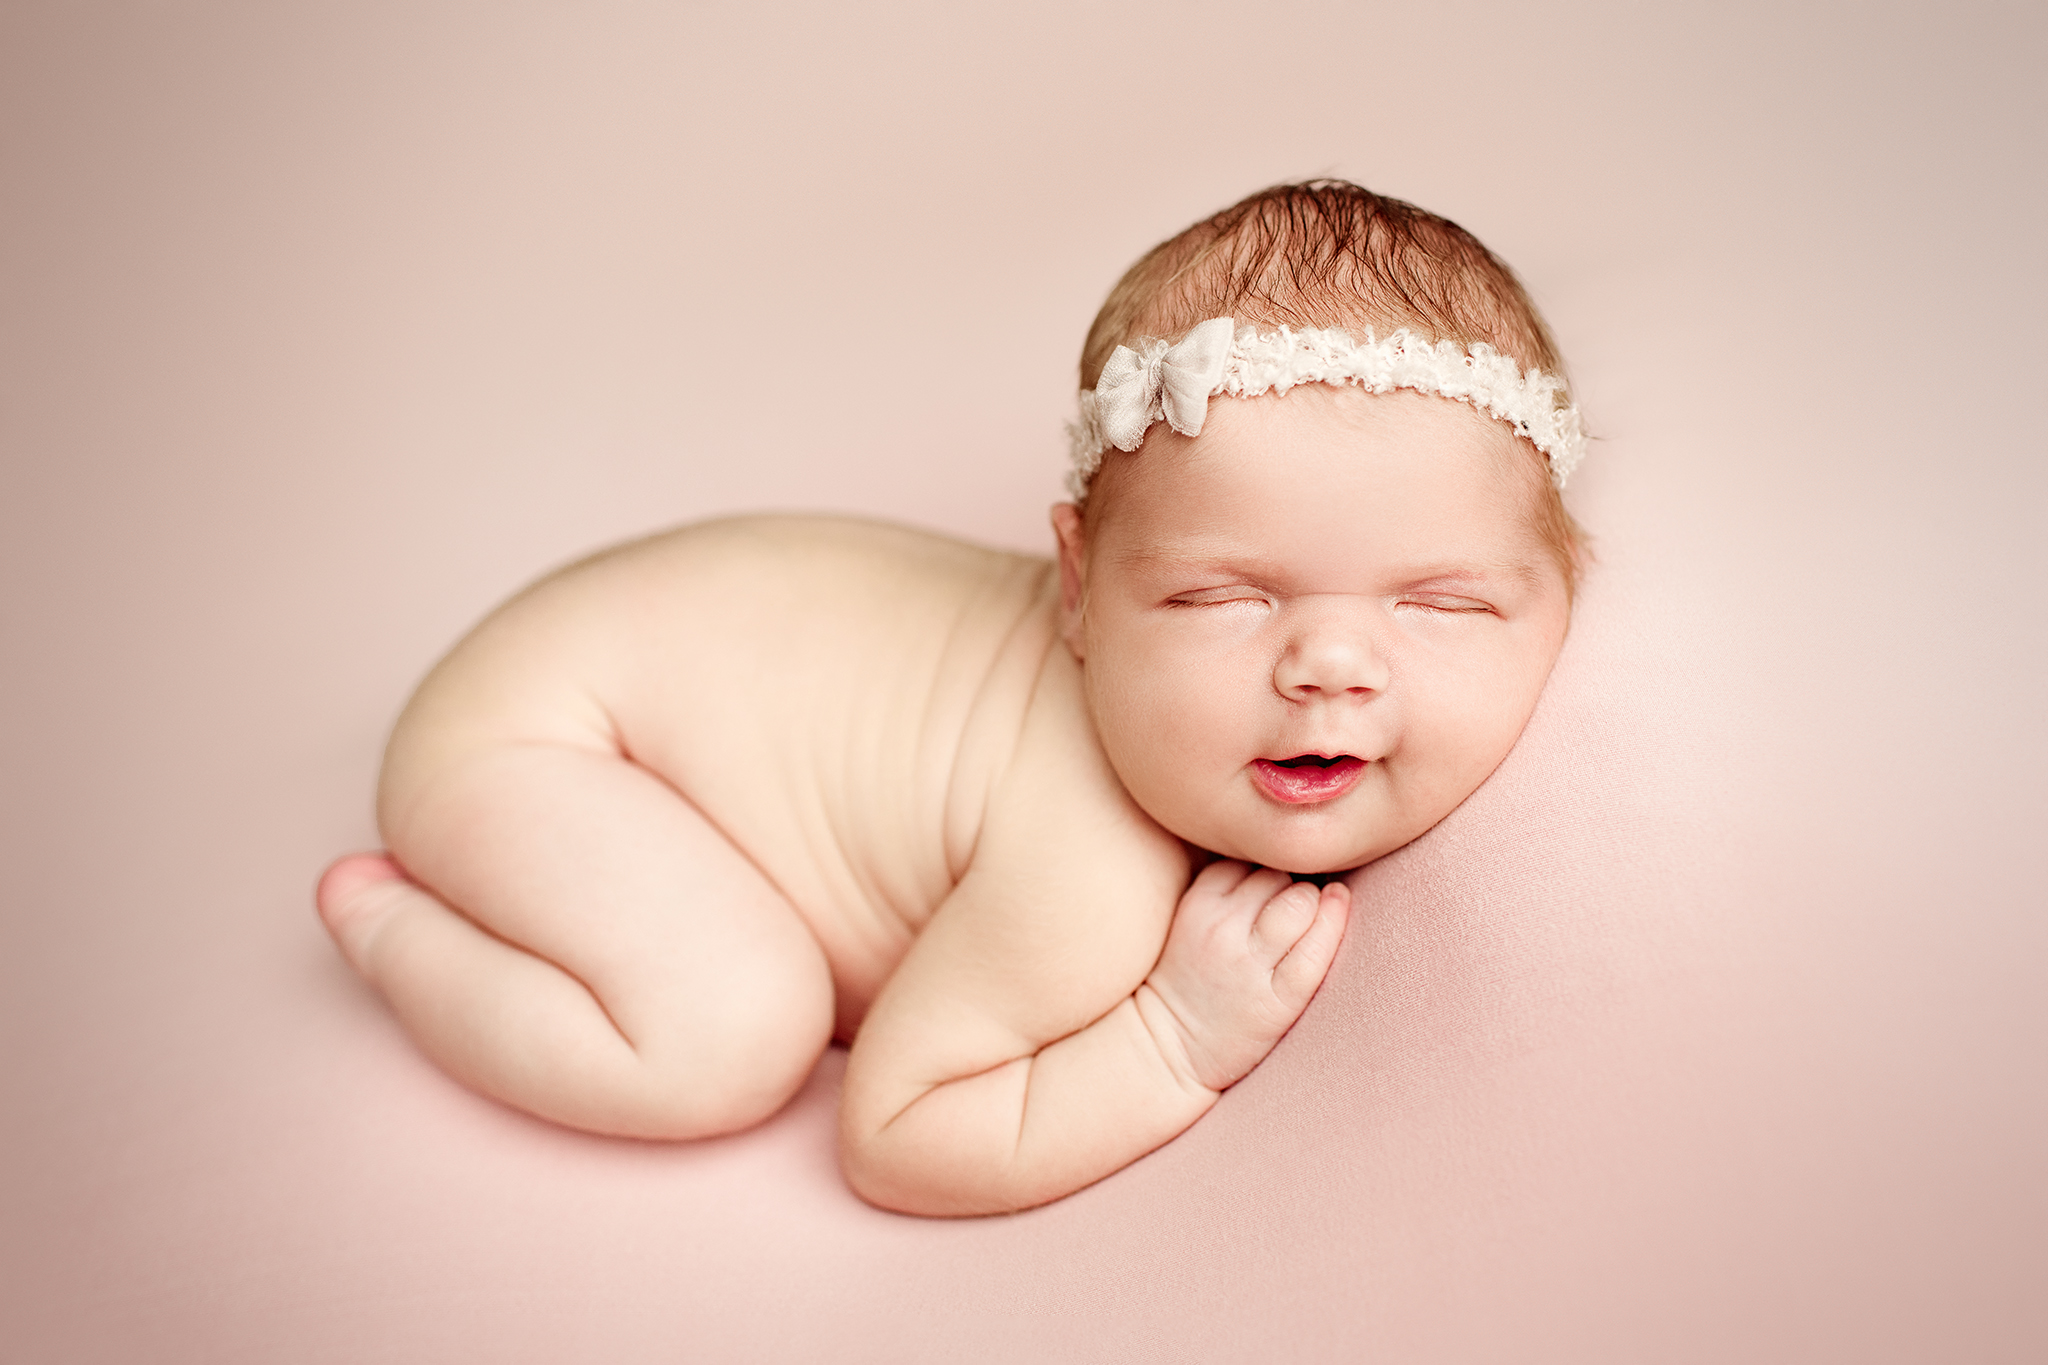 Studio newborn photo of smiling baby girl on pink background in Jacksonville, FL.